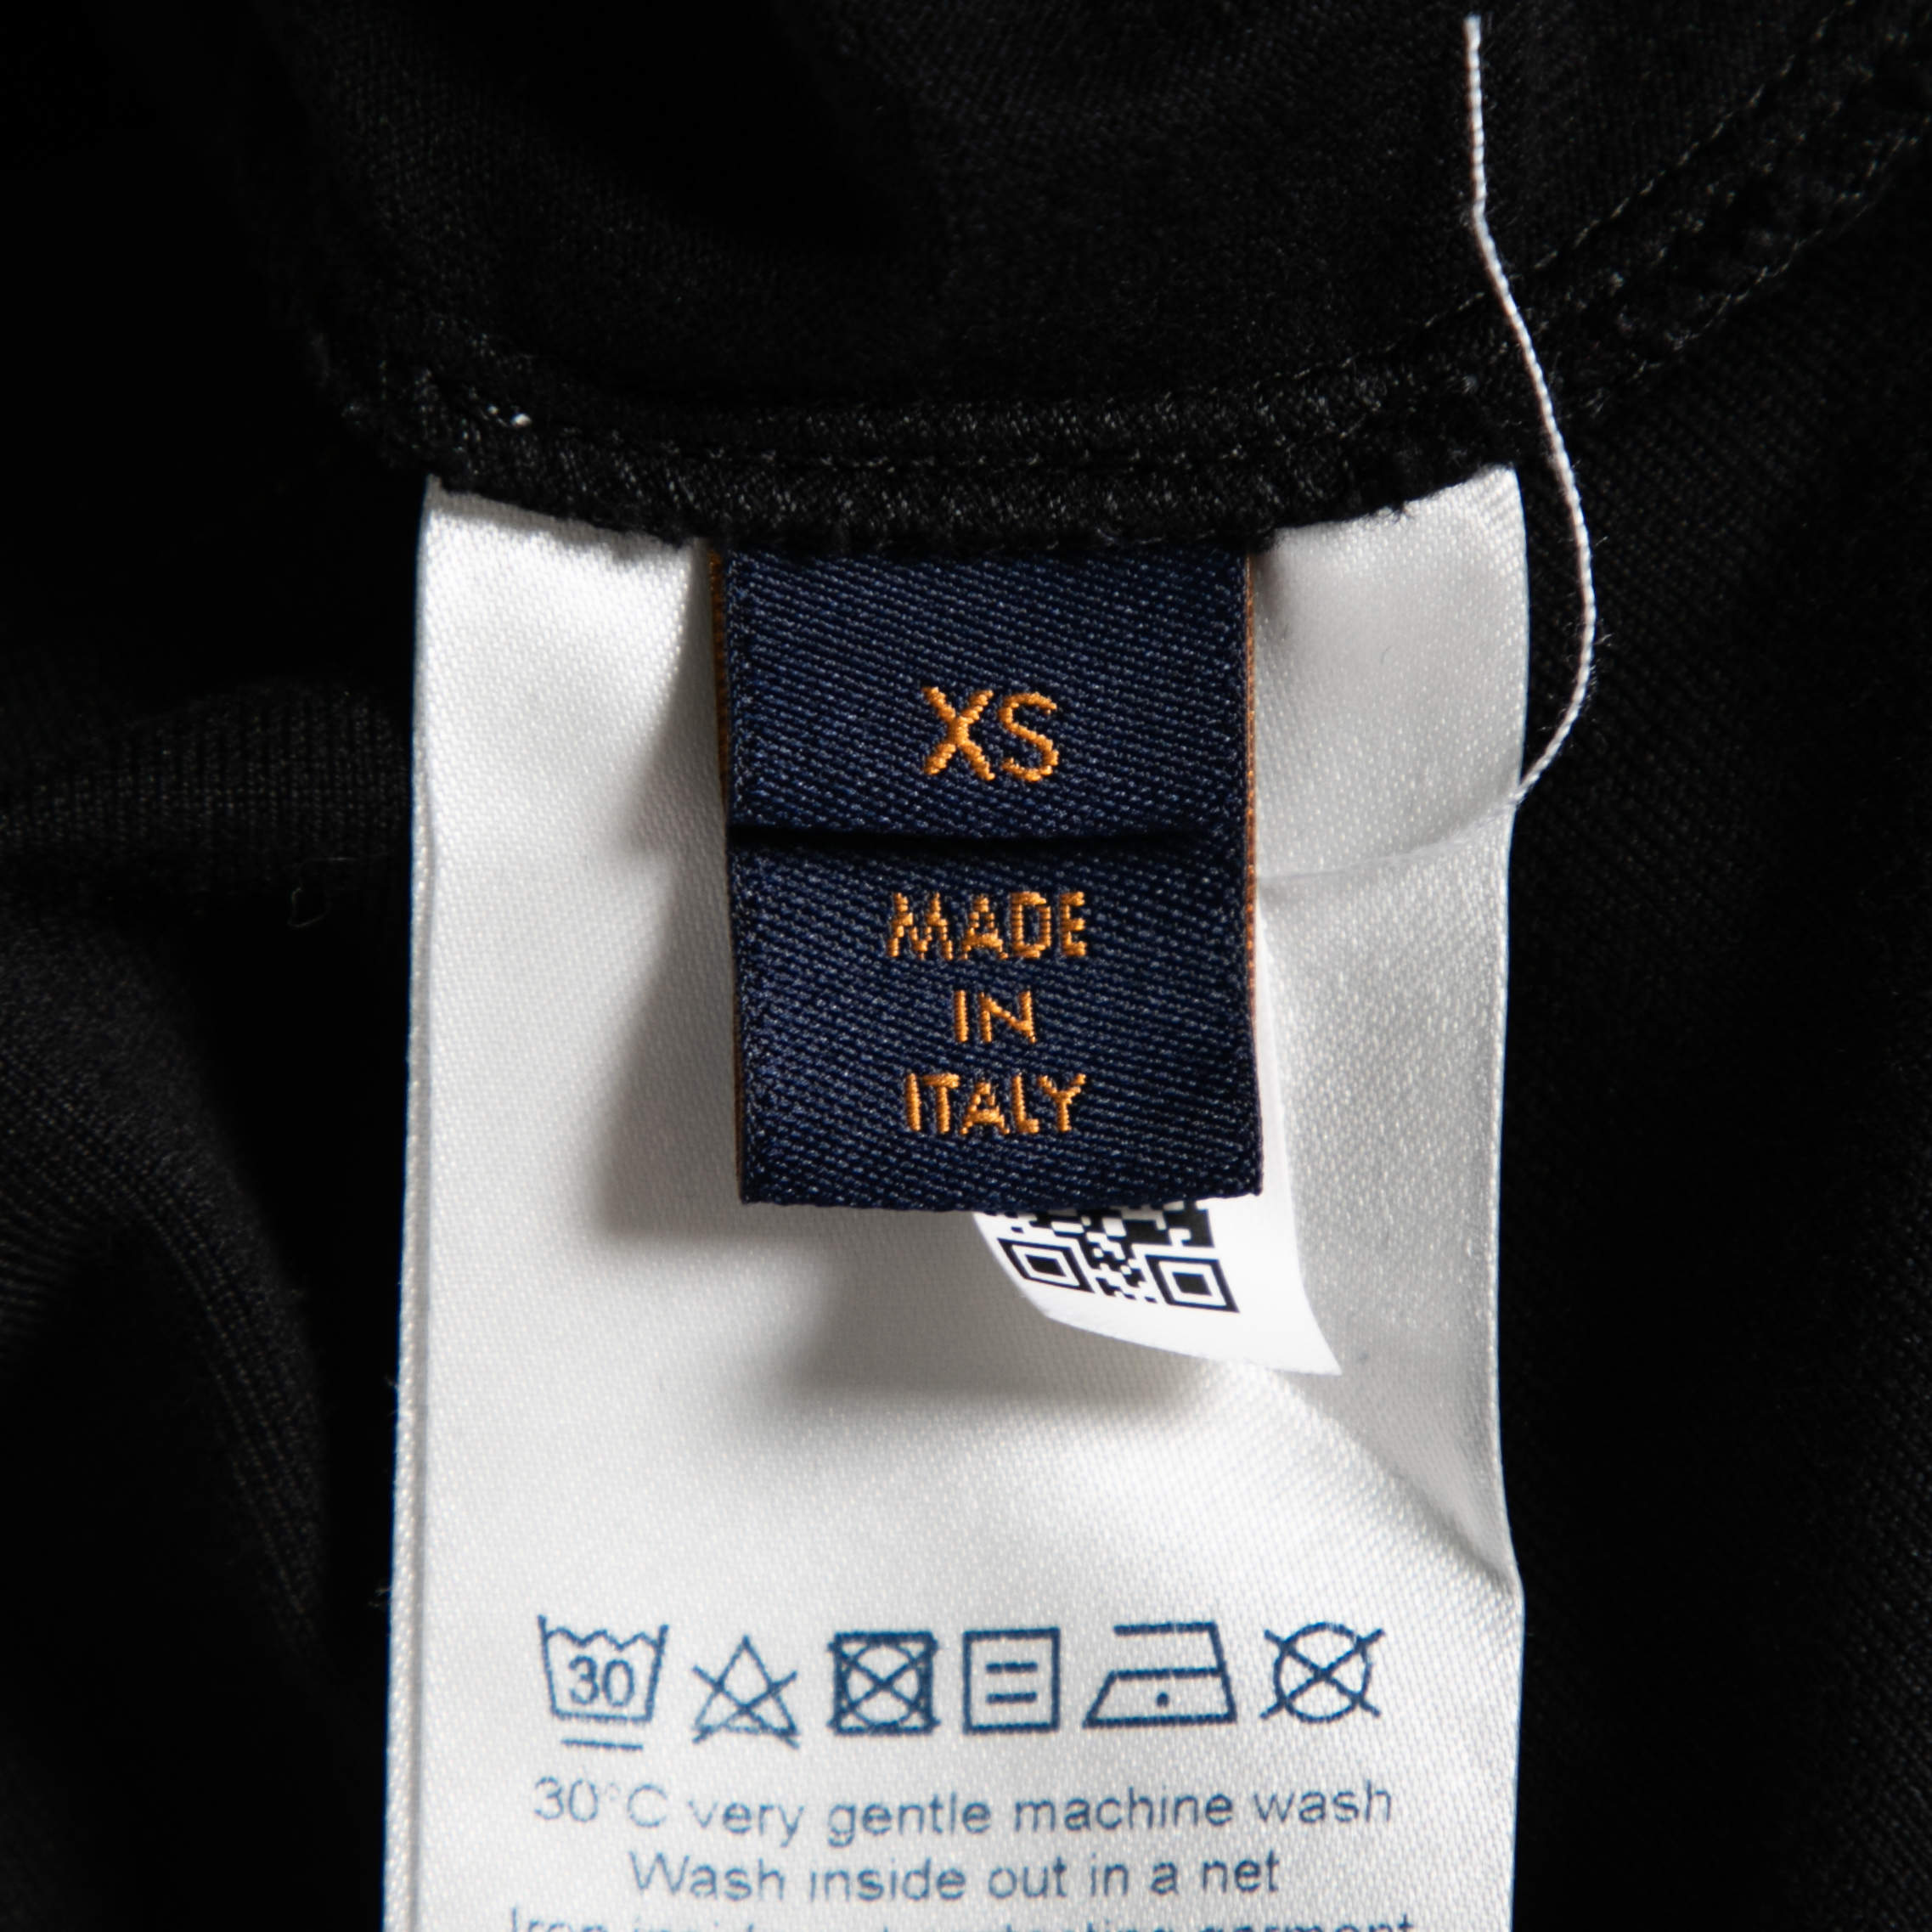 Louis Vuitton 2020 Stitch Print T-Shirt - Black T-Shirts, Clothing -  LOU764135